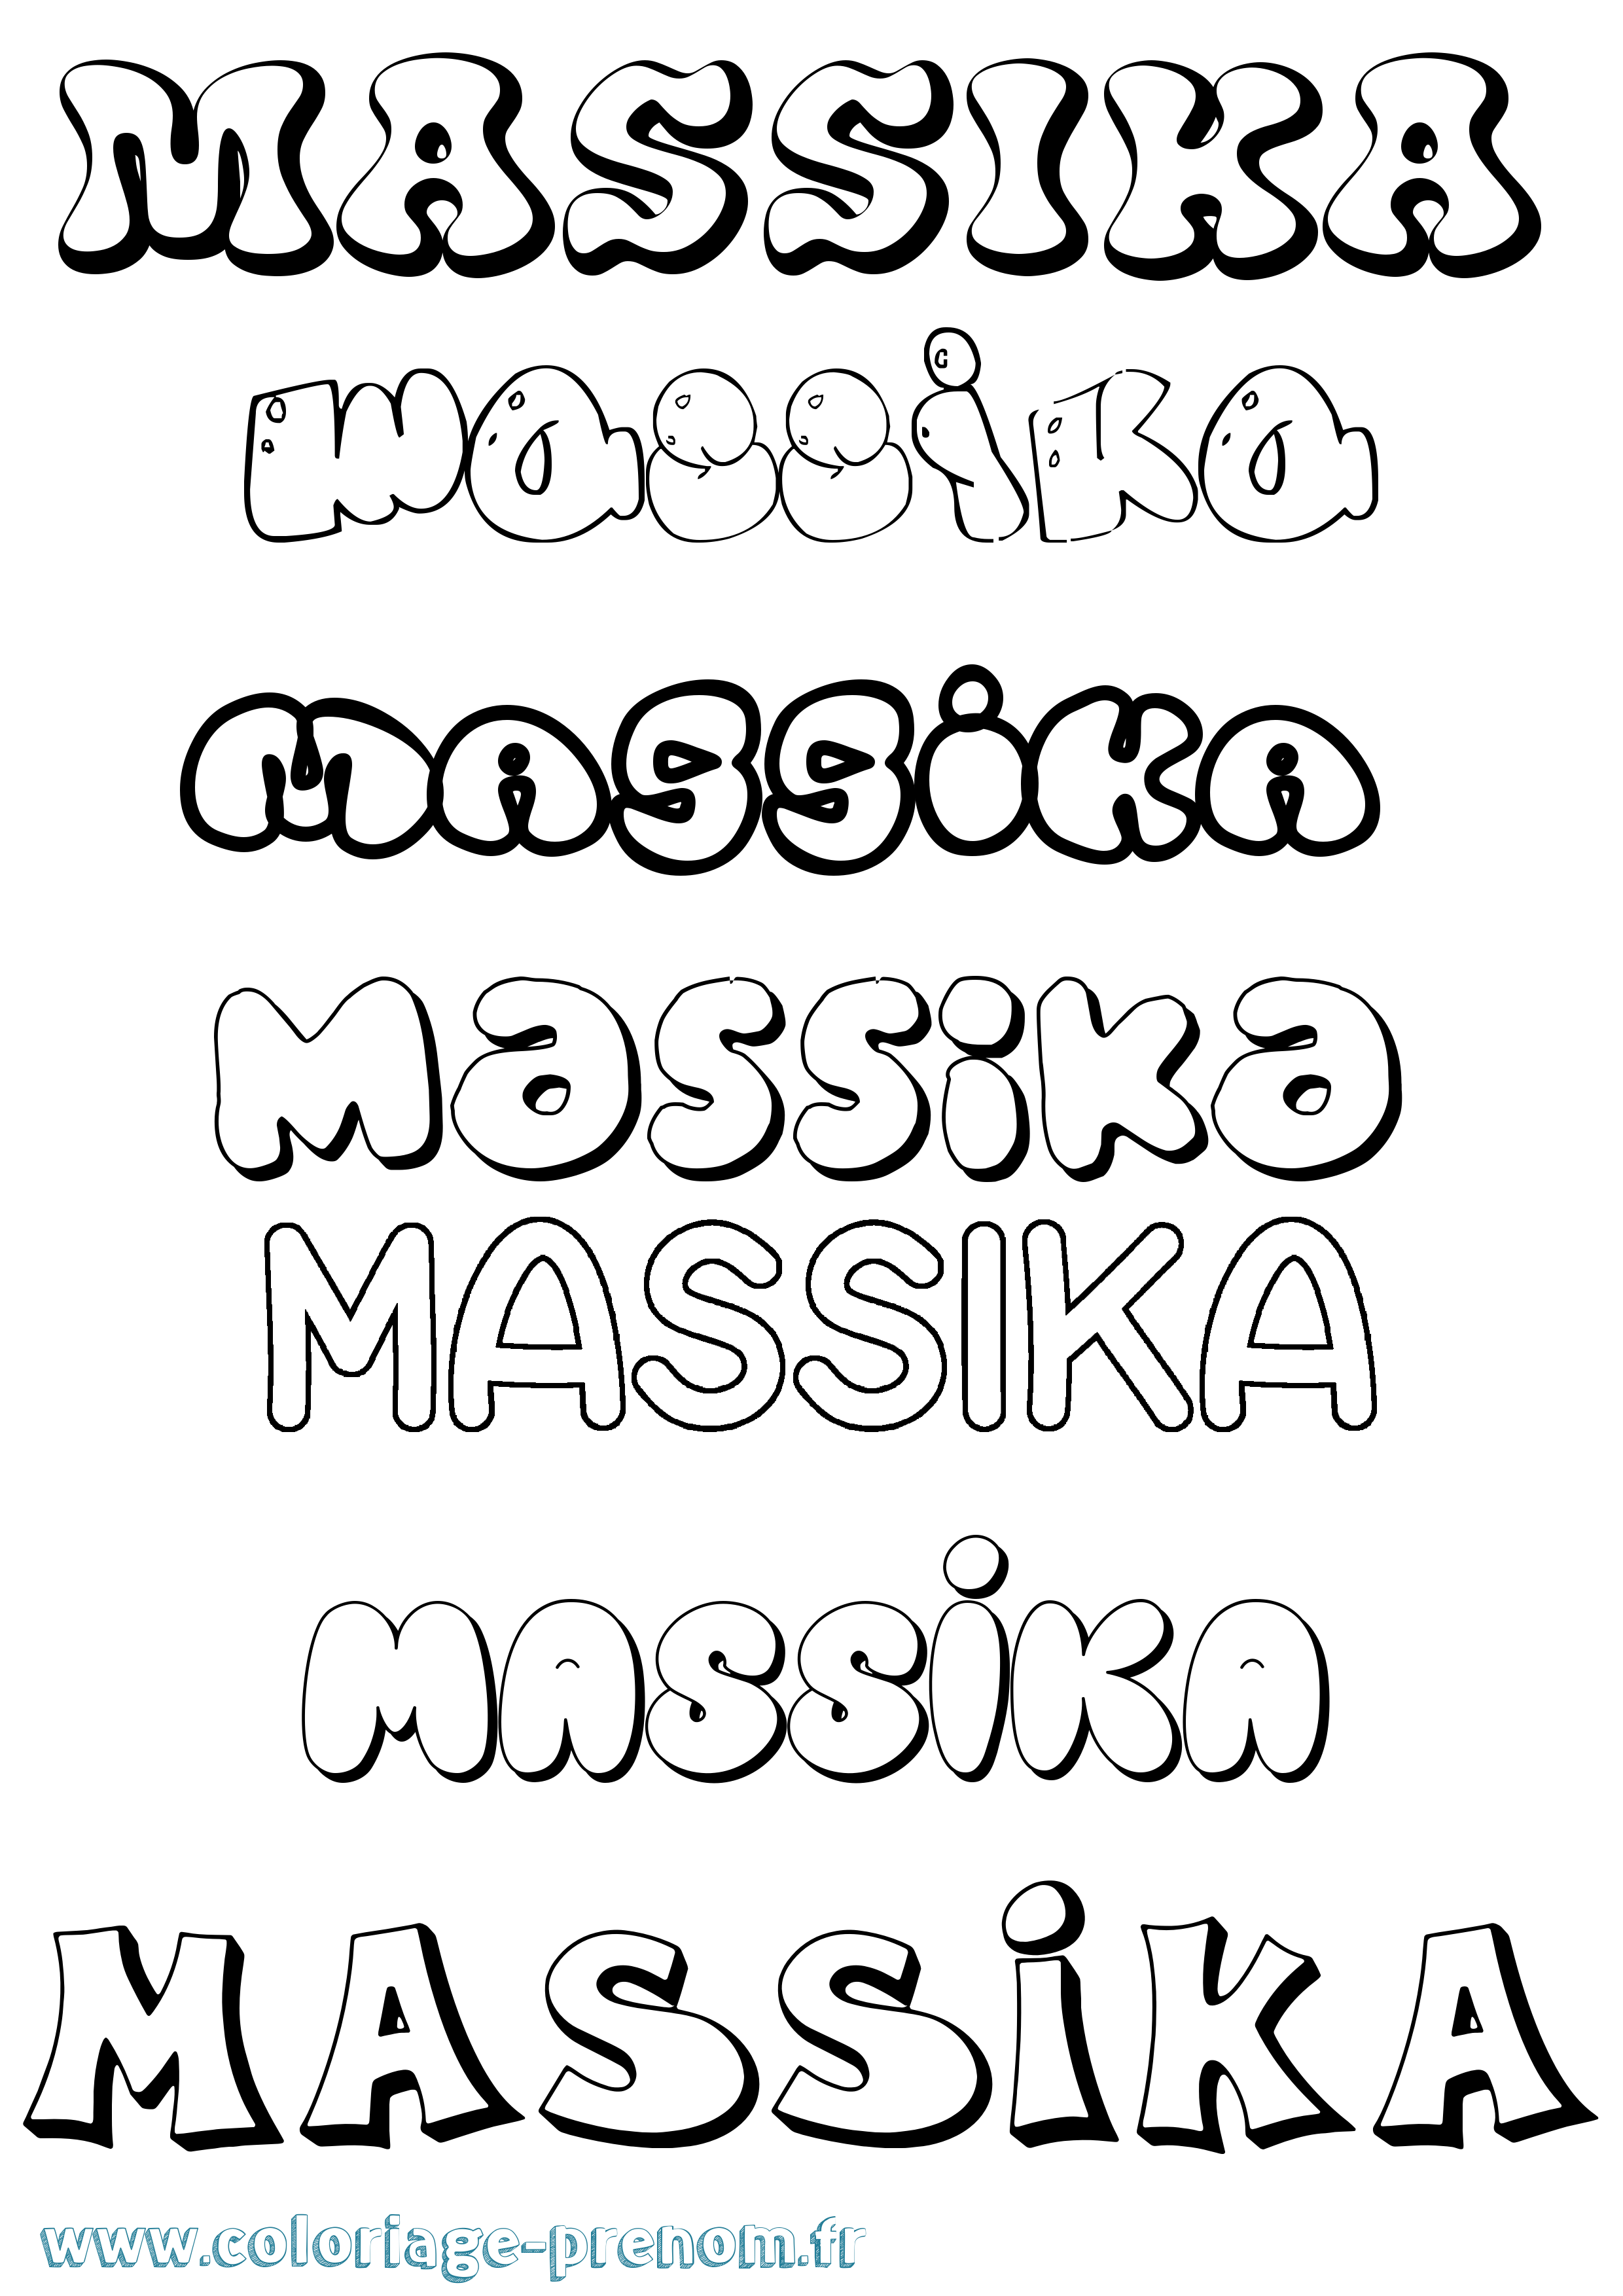 Coloriage prénom Massika Bubble